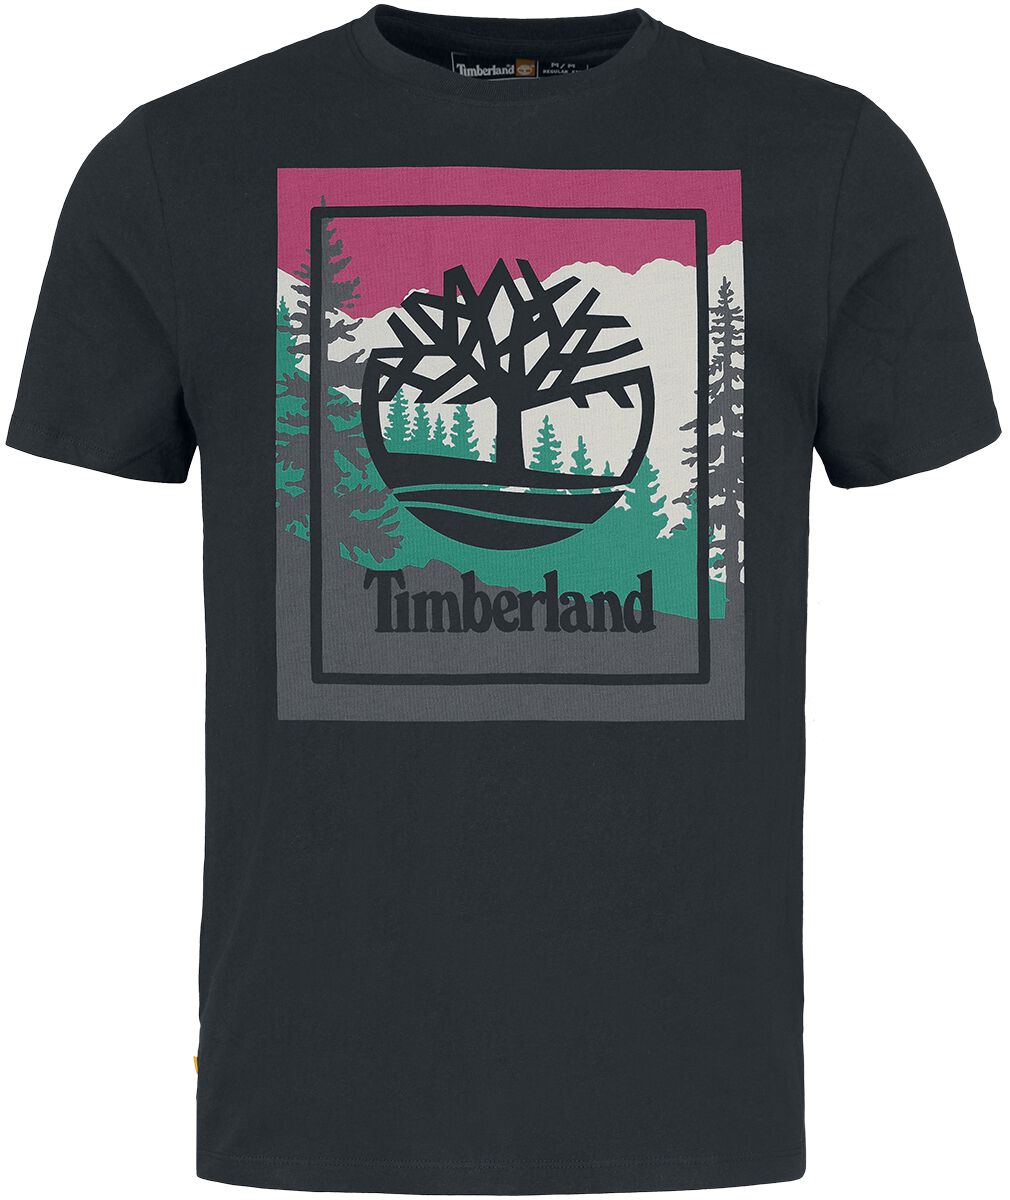 Timberland Outdoor Inspired Graphic Tee T-Shirt schwarz in S